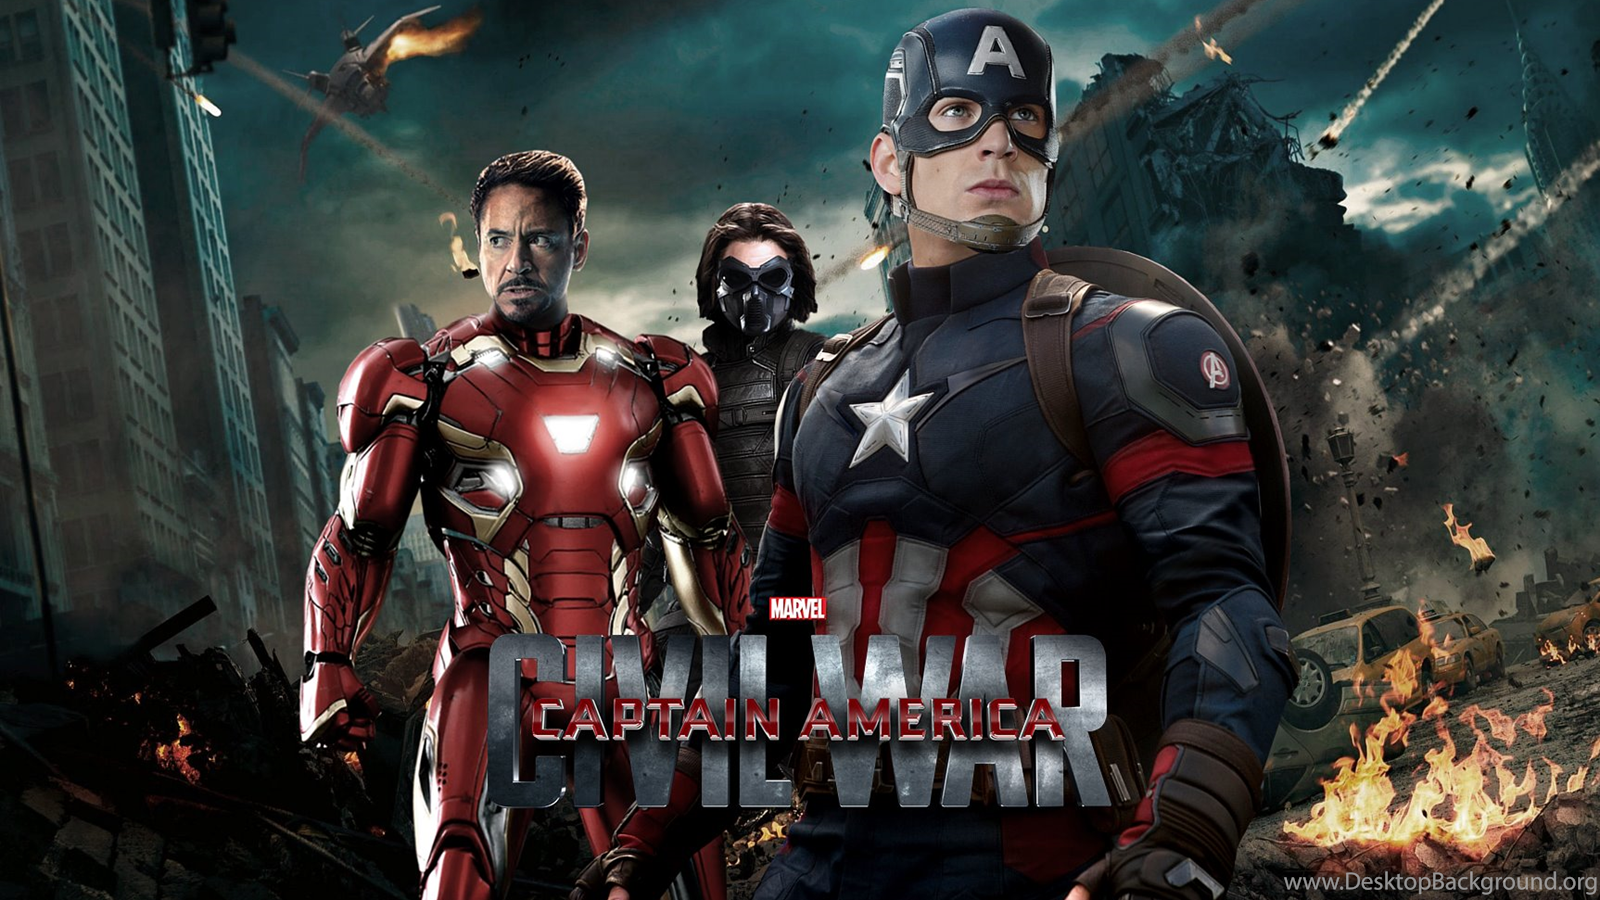 Captain America:Civil War Movie Poster Image HD Wallpaper 2016. Desktop Background